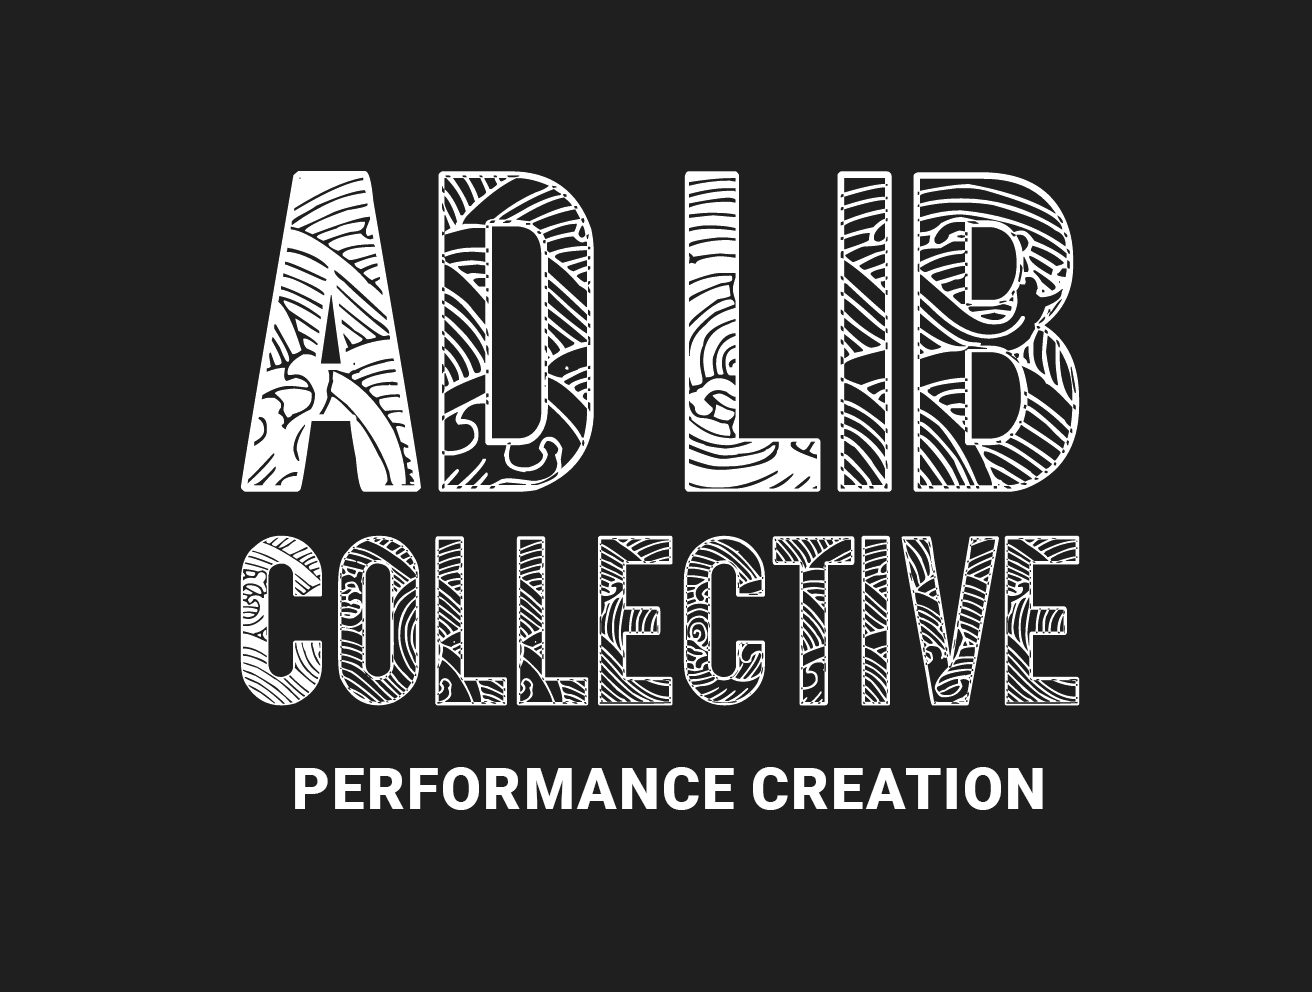 AdLib Collective